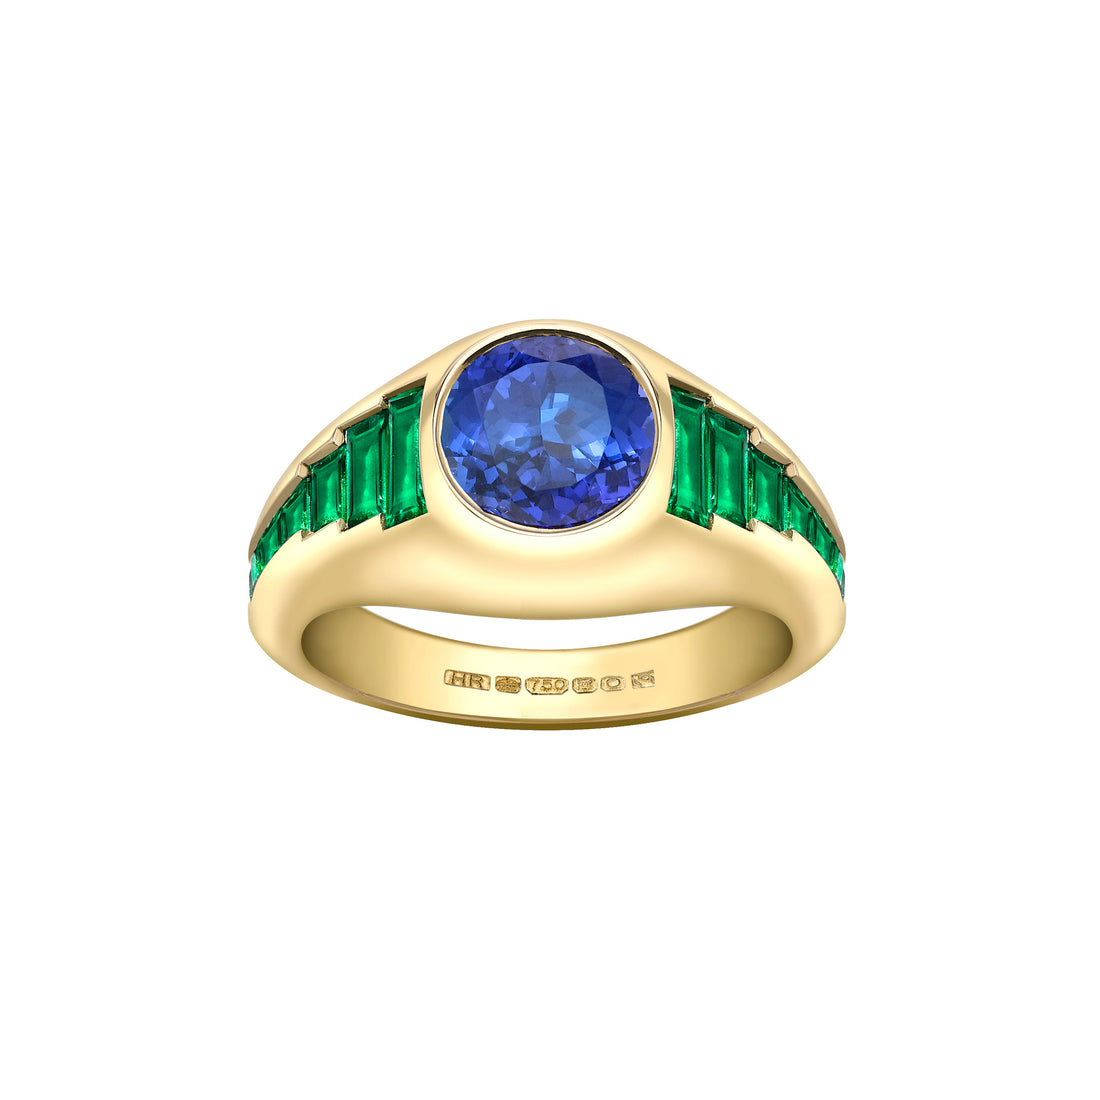  Sapphire & Baguette Cut Emerald Ring by Hattie Rickards | The Cut London